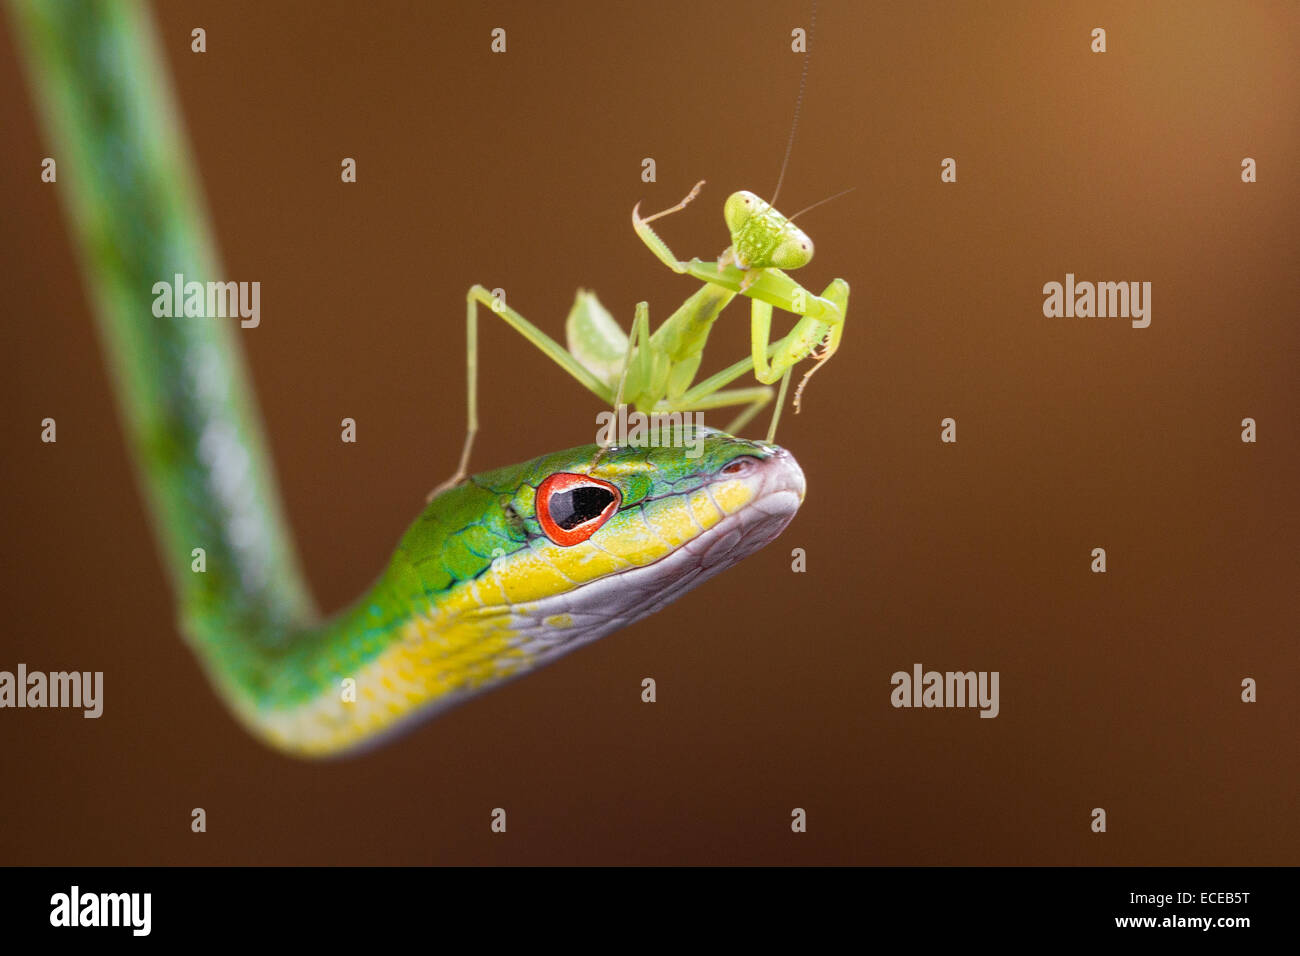 Indonesia, Riau Islands, Batam City, Mantis on snake Stock Photo